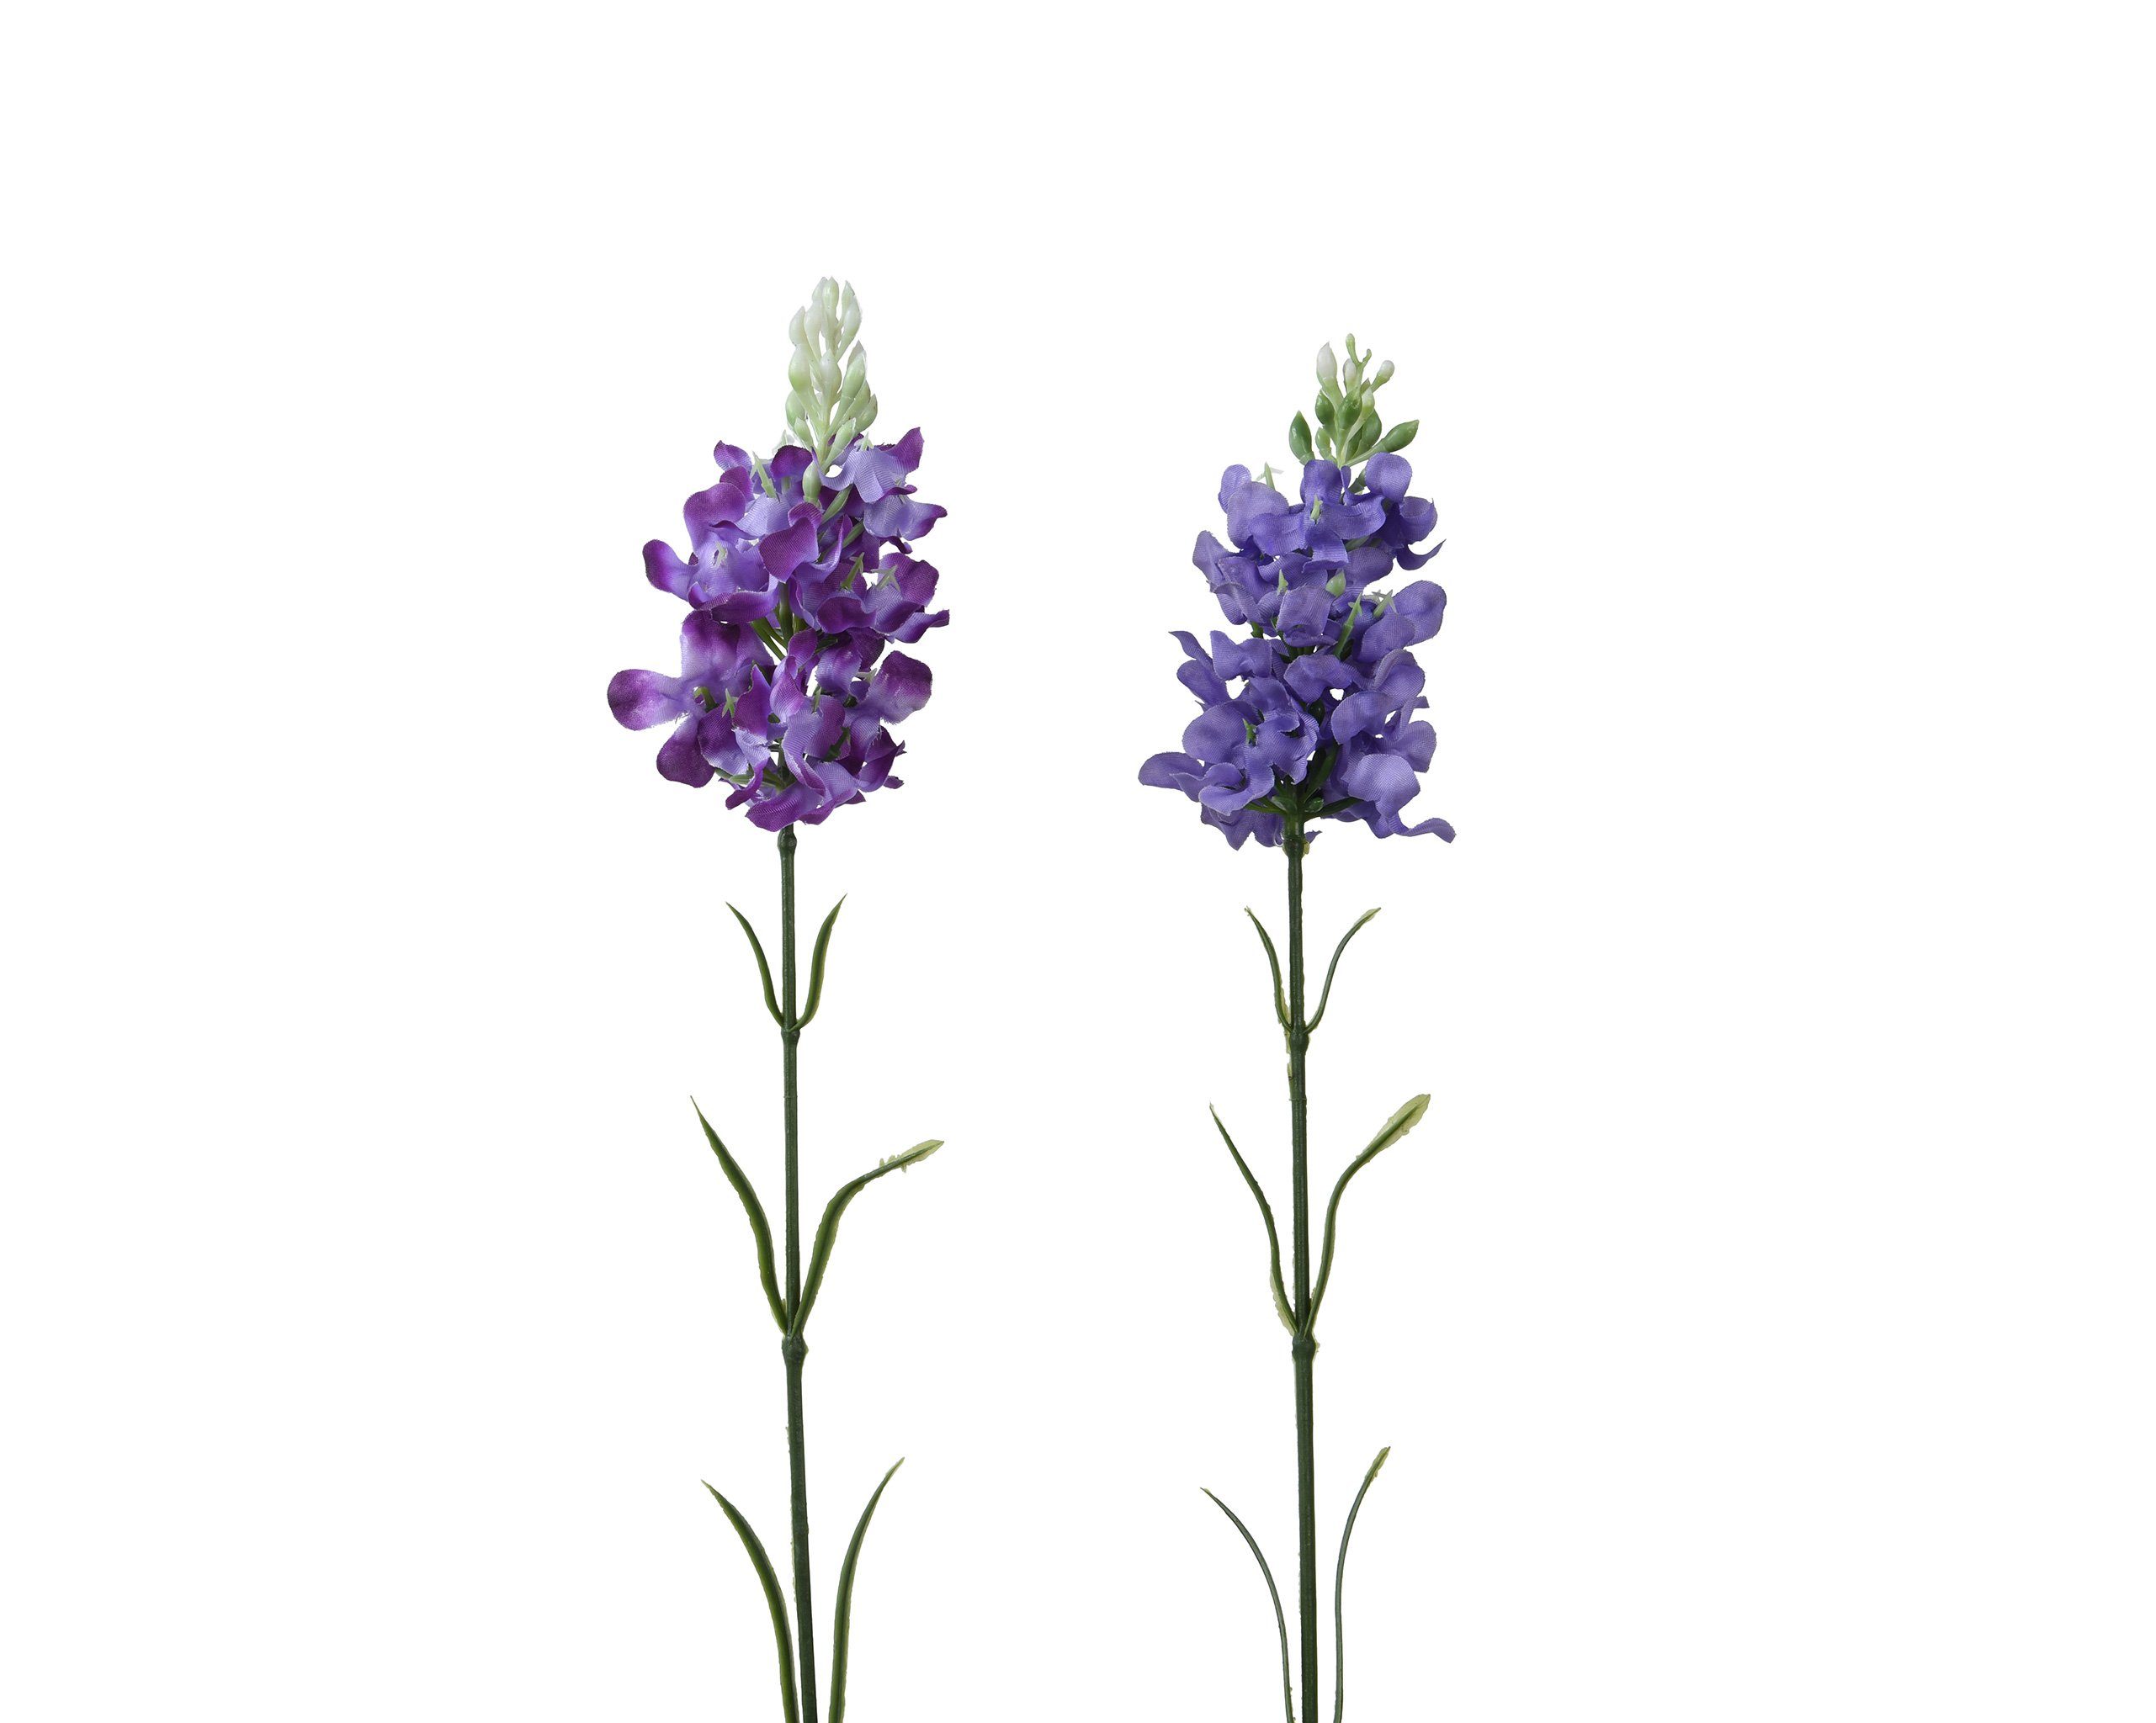 Kunstblume, Decoris season decorations, Kunstblumen Lavendel mit Stiel 48cm Lila / Violett 1 Stück sortiert